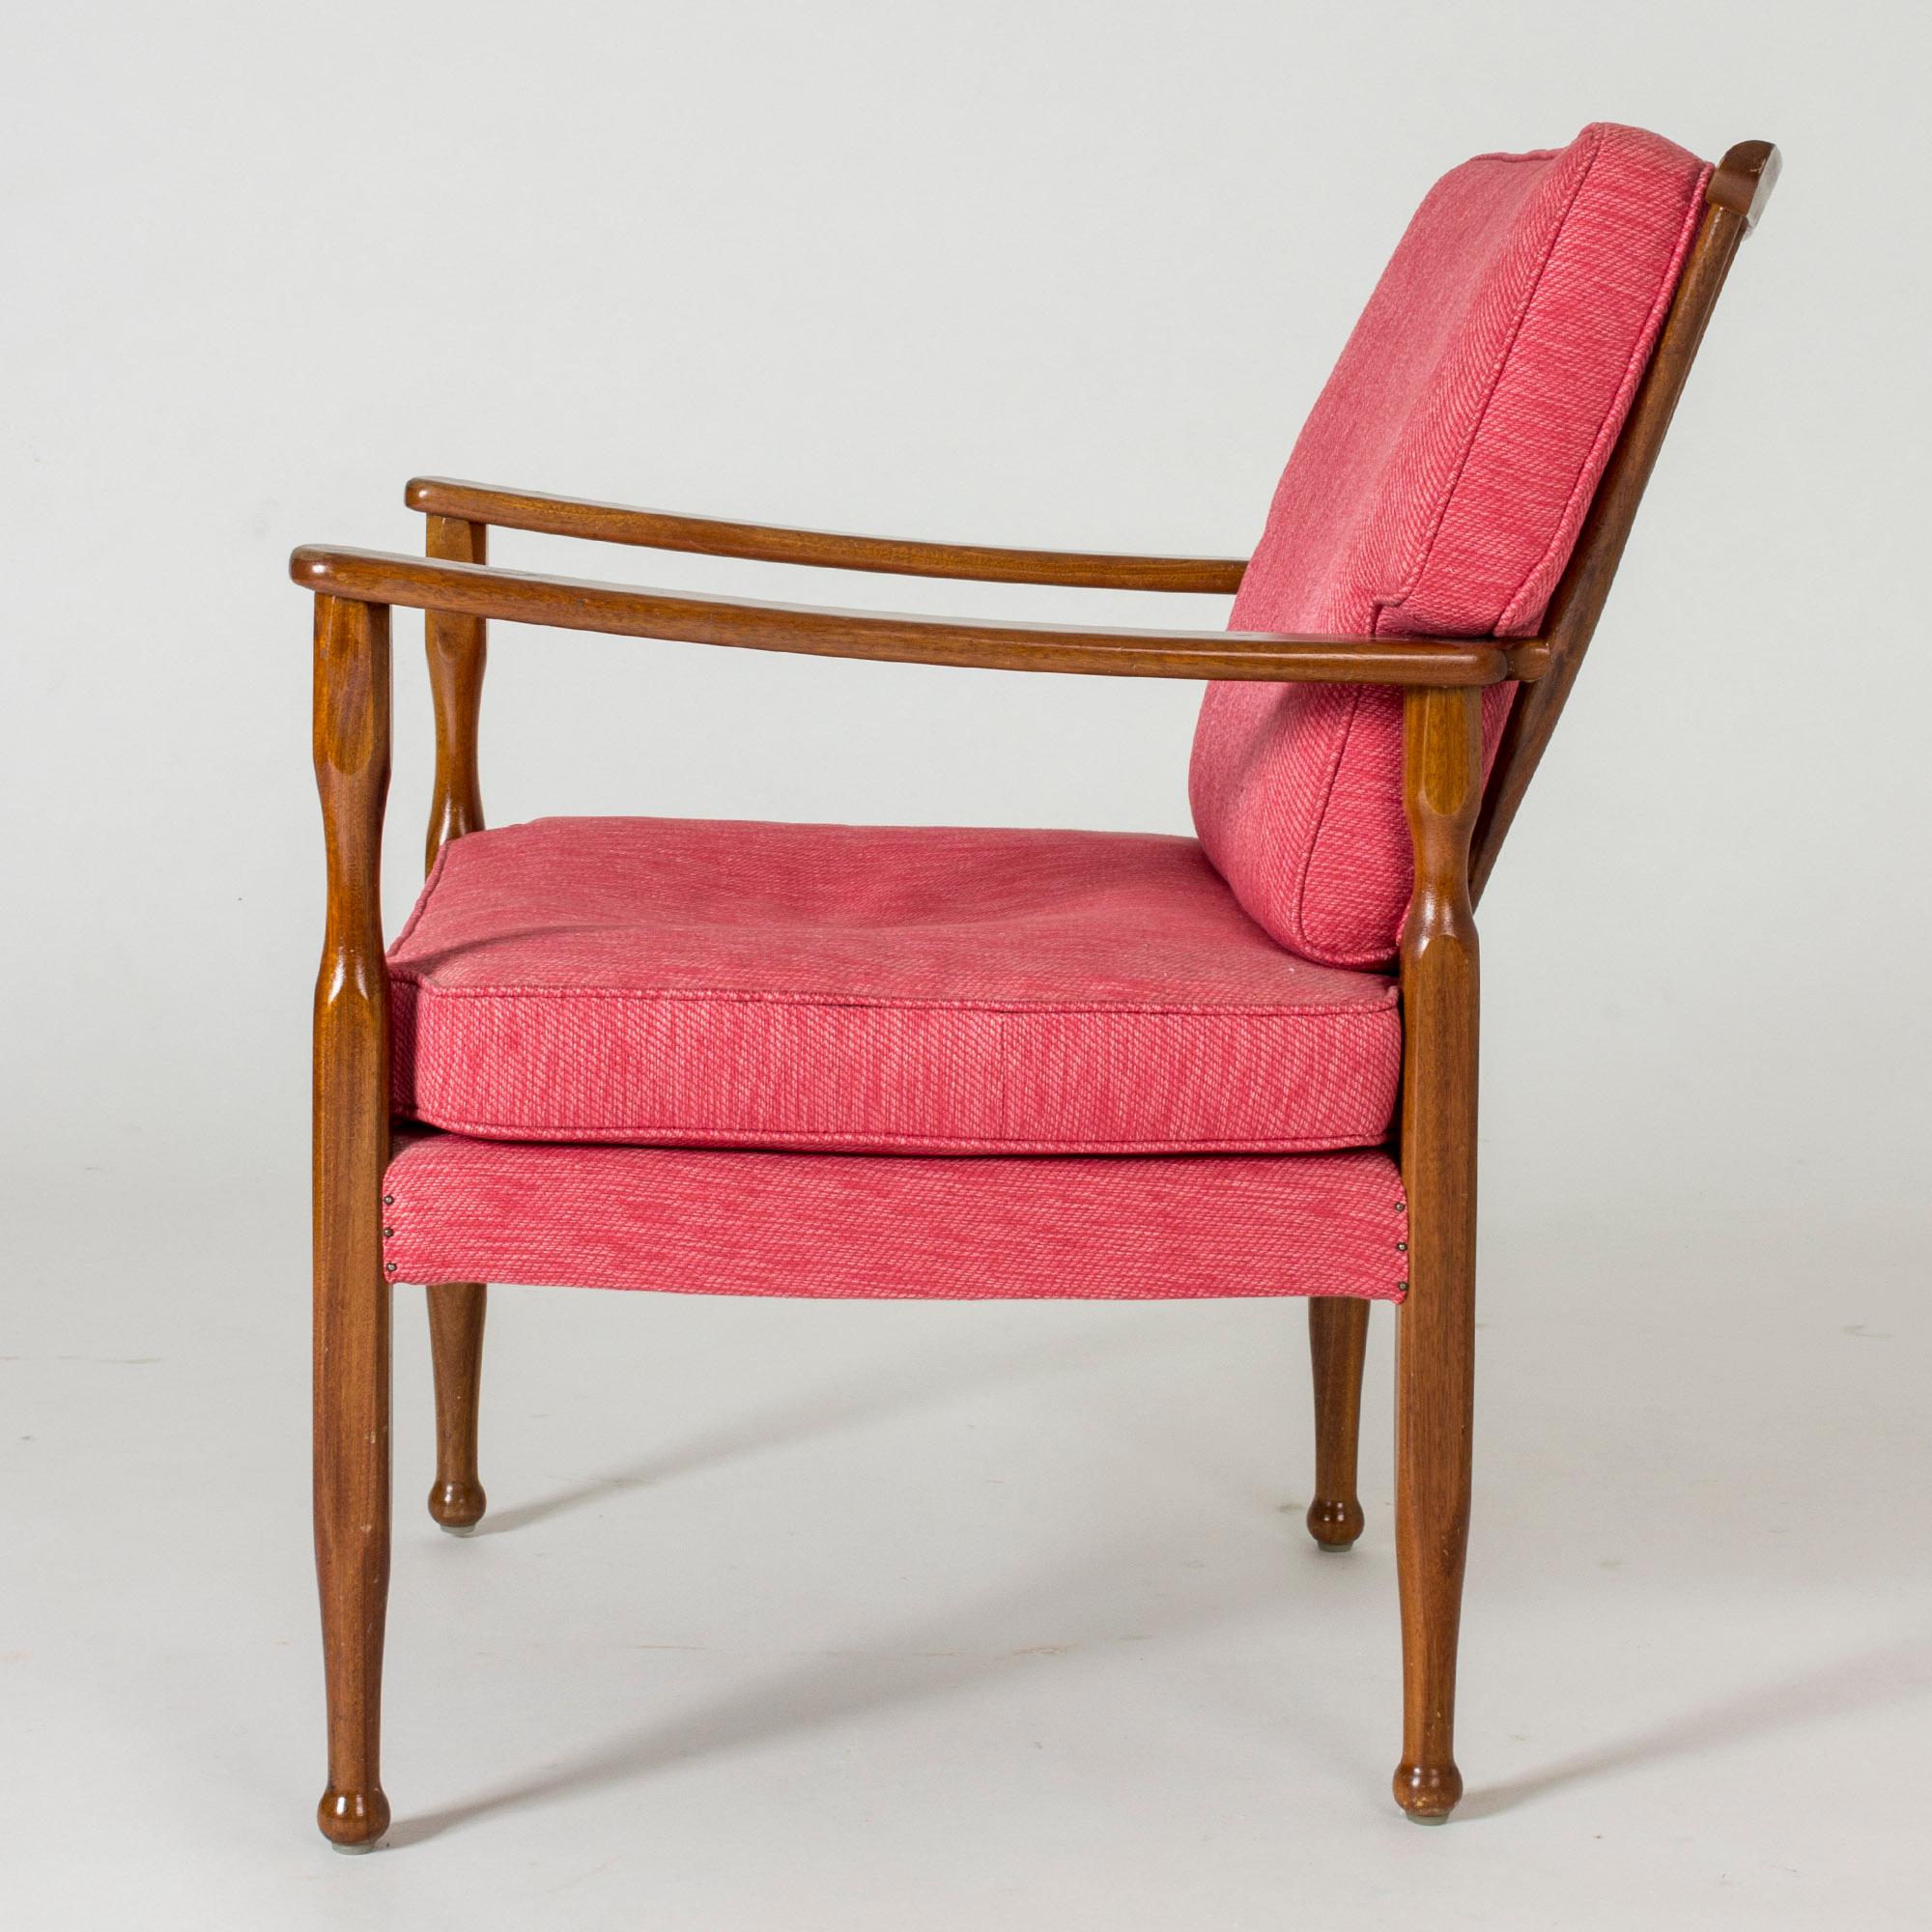 Mid-20th Century Mahogany Lounge Chair by Josef Frank for Svenskt Tenn, Sweden, 1950s